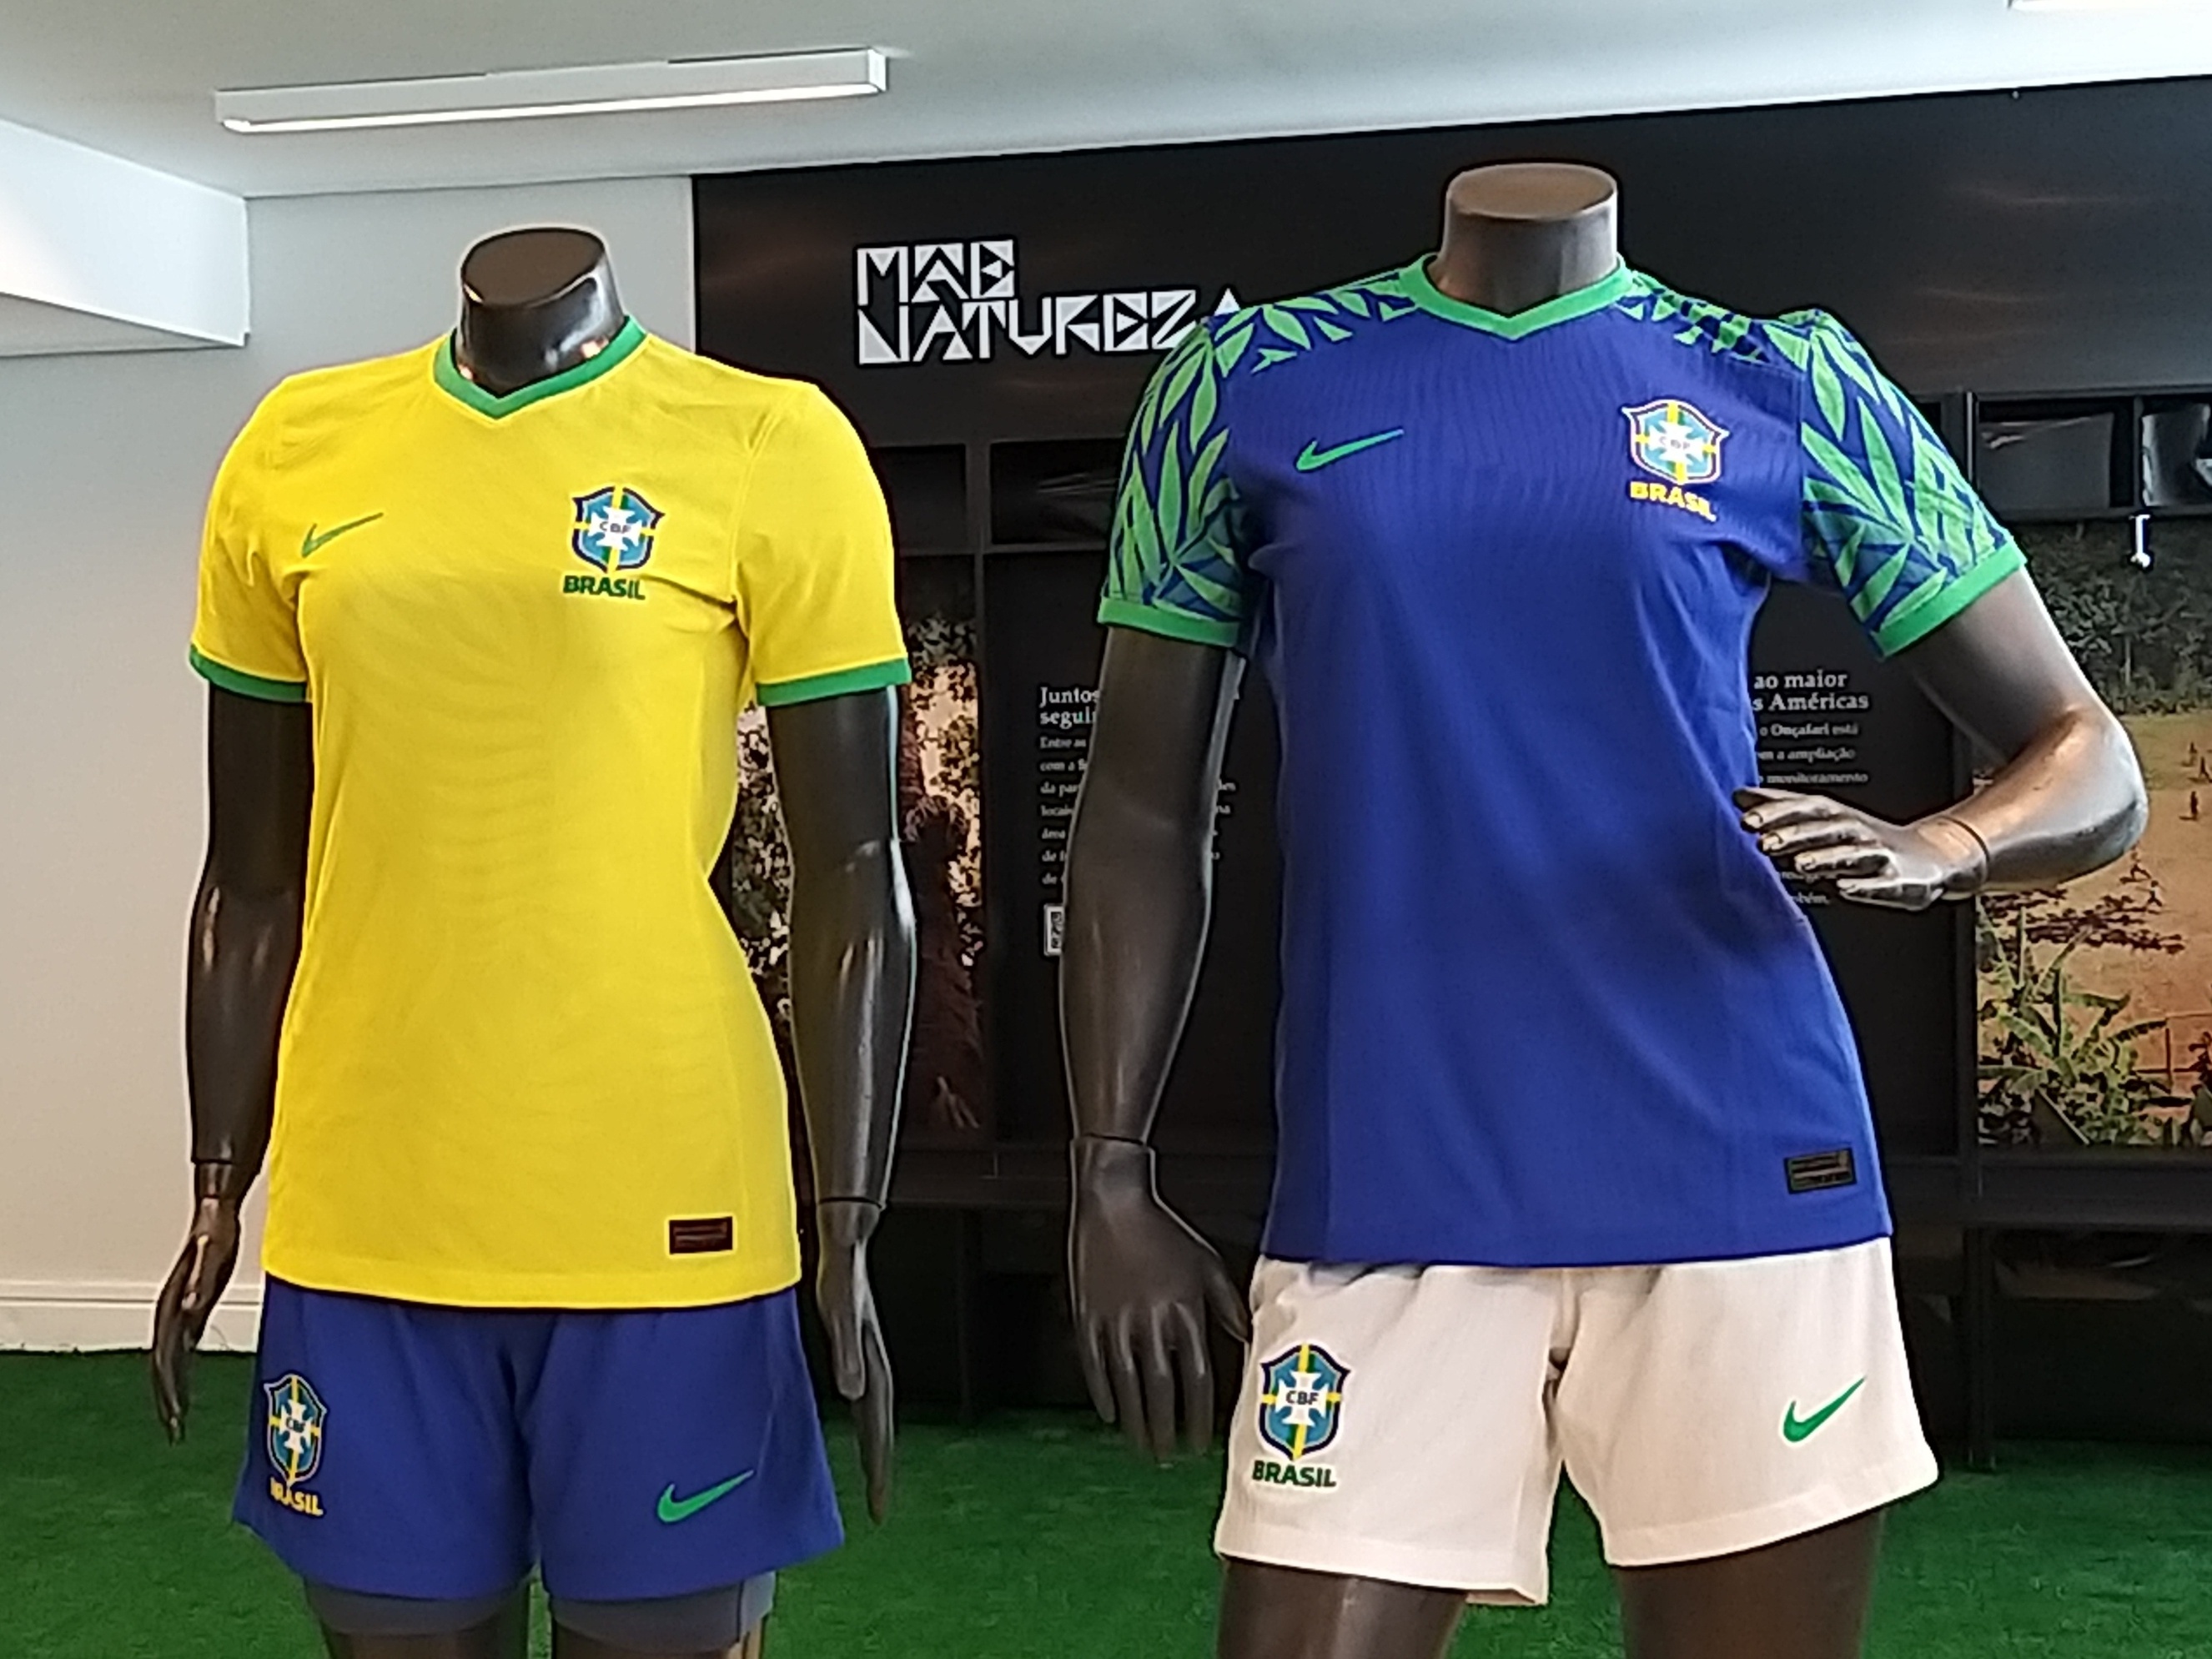 Camiseta Brasil Feminina Torcedor Copa Comemorativa